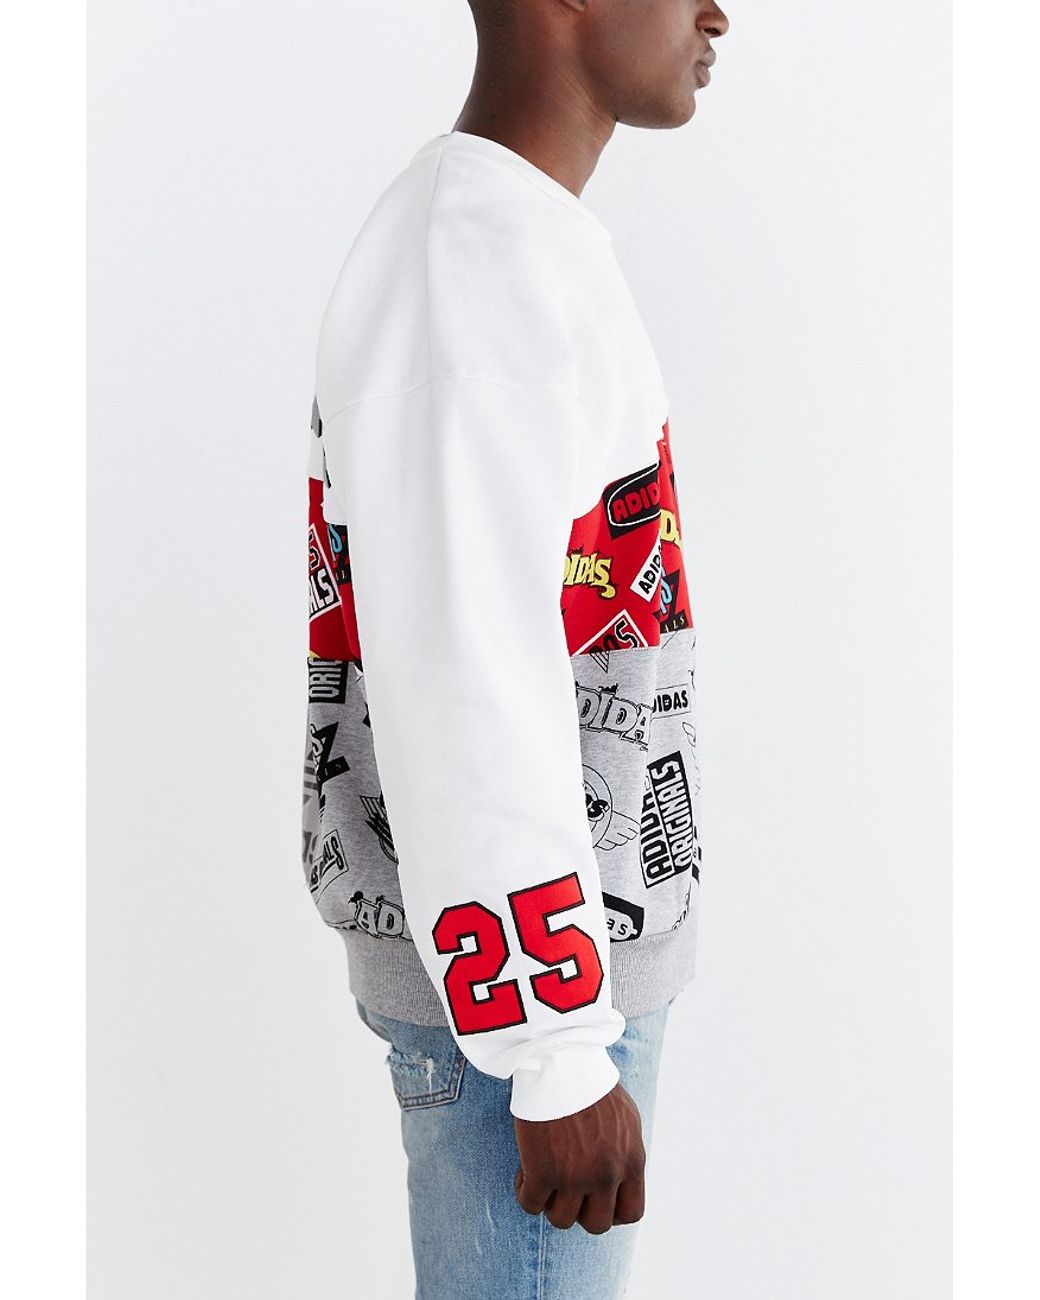 adidas Originals X Nigo Jams Blocked Sweatshirt in White for Men